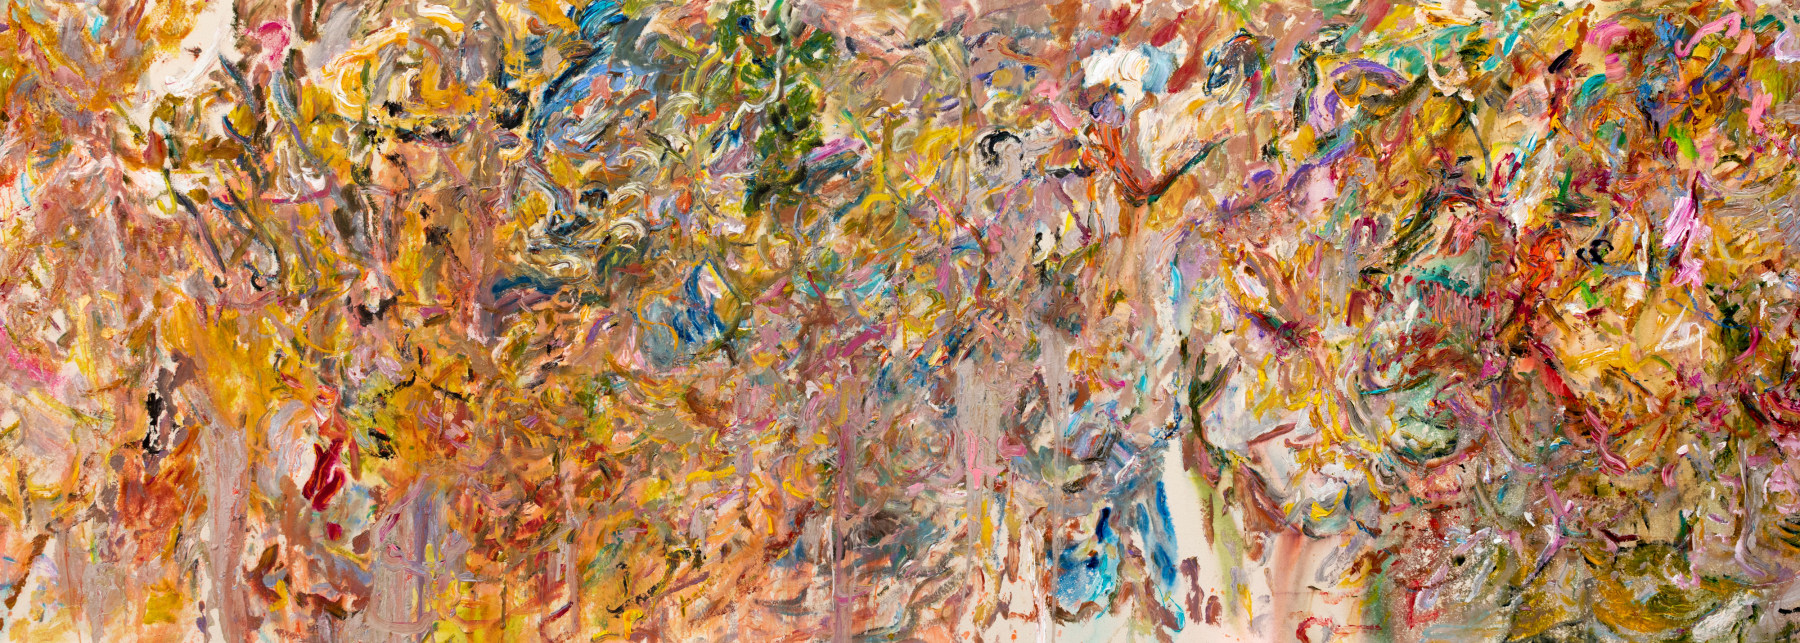 LARRY POONS (American b. 1937)

Goodbye Joe

2021

Acrylic on canvas

56 x 155 inches

142.2 x 393.7cm